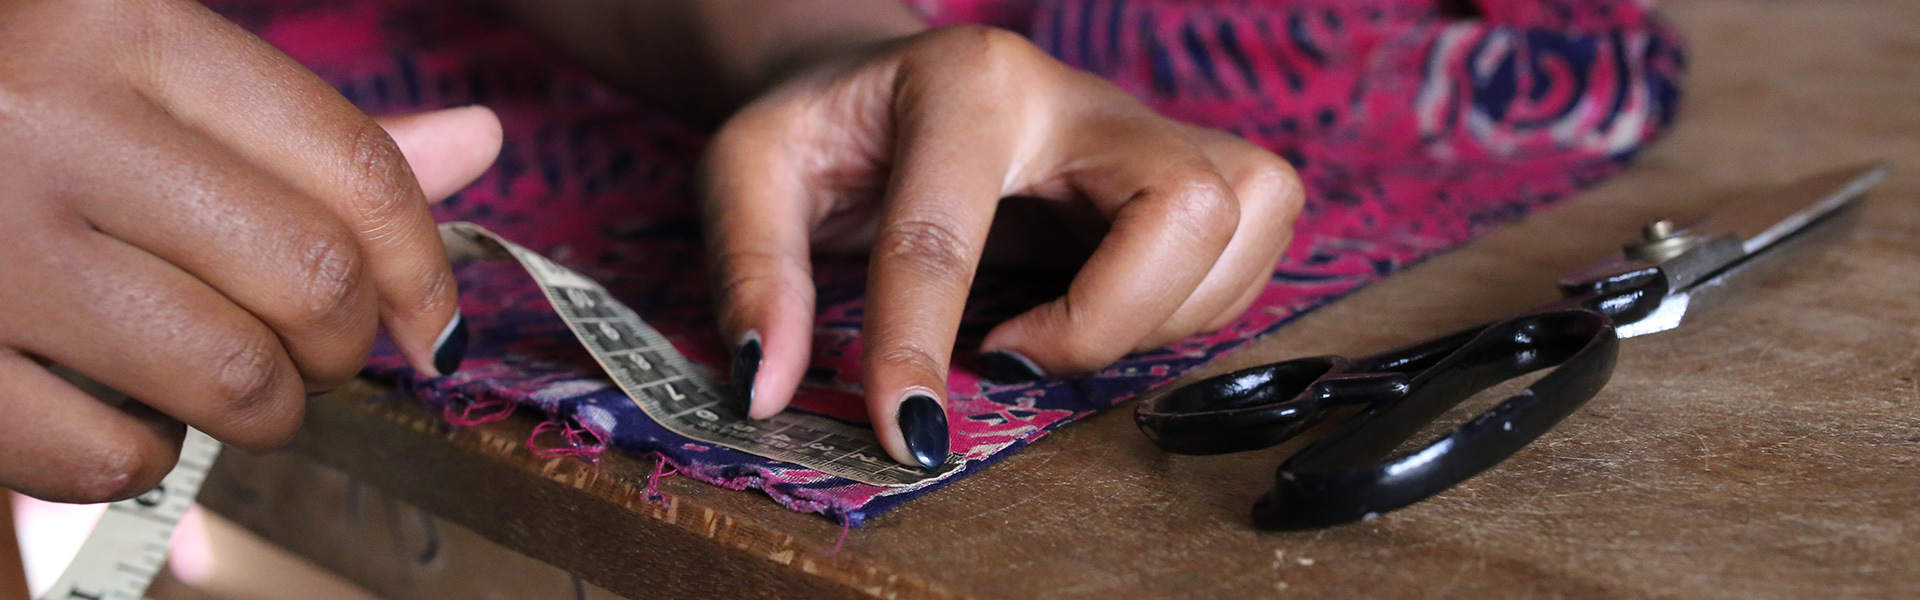 tanzania-bonga-hands-sewing-tailor-scissors